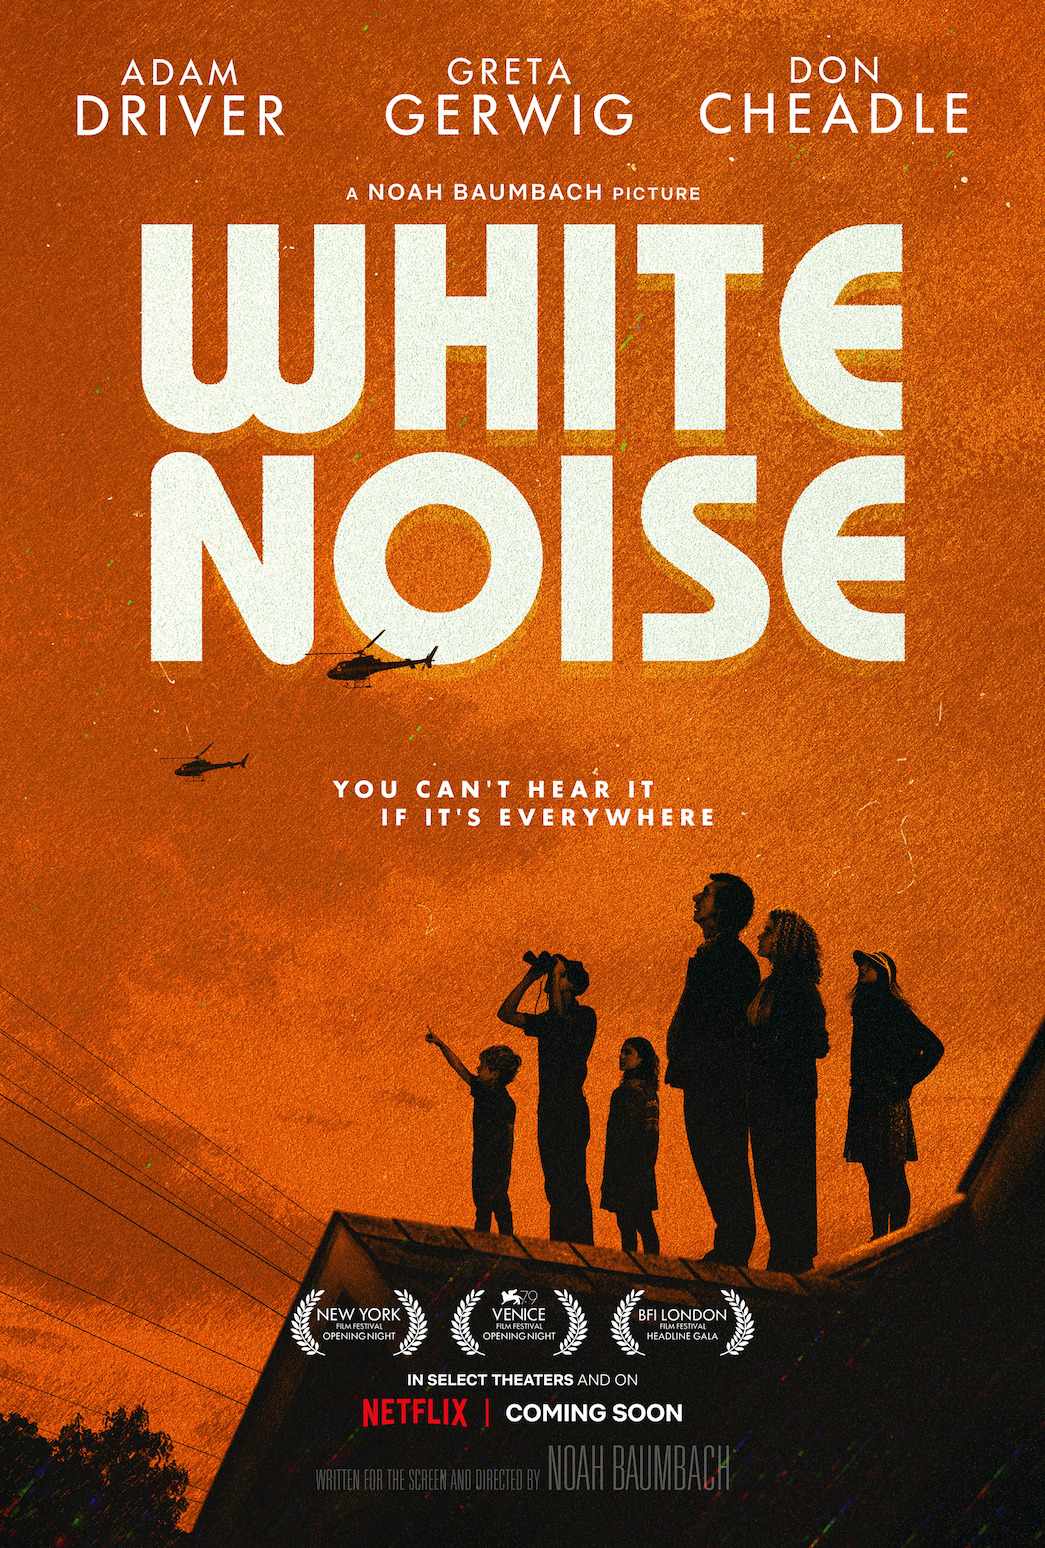 Is White Noise premiering on Netflix in 2022?